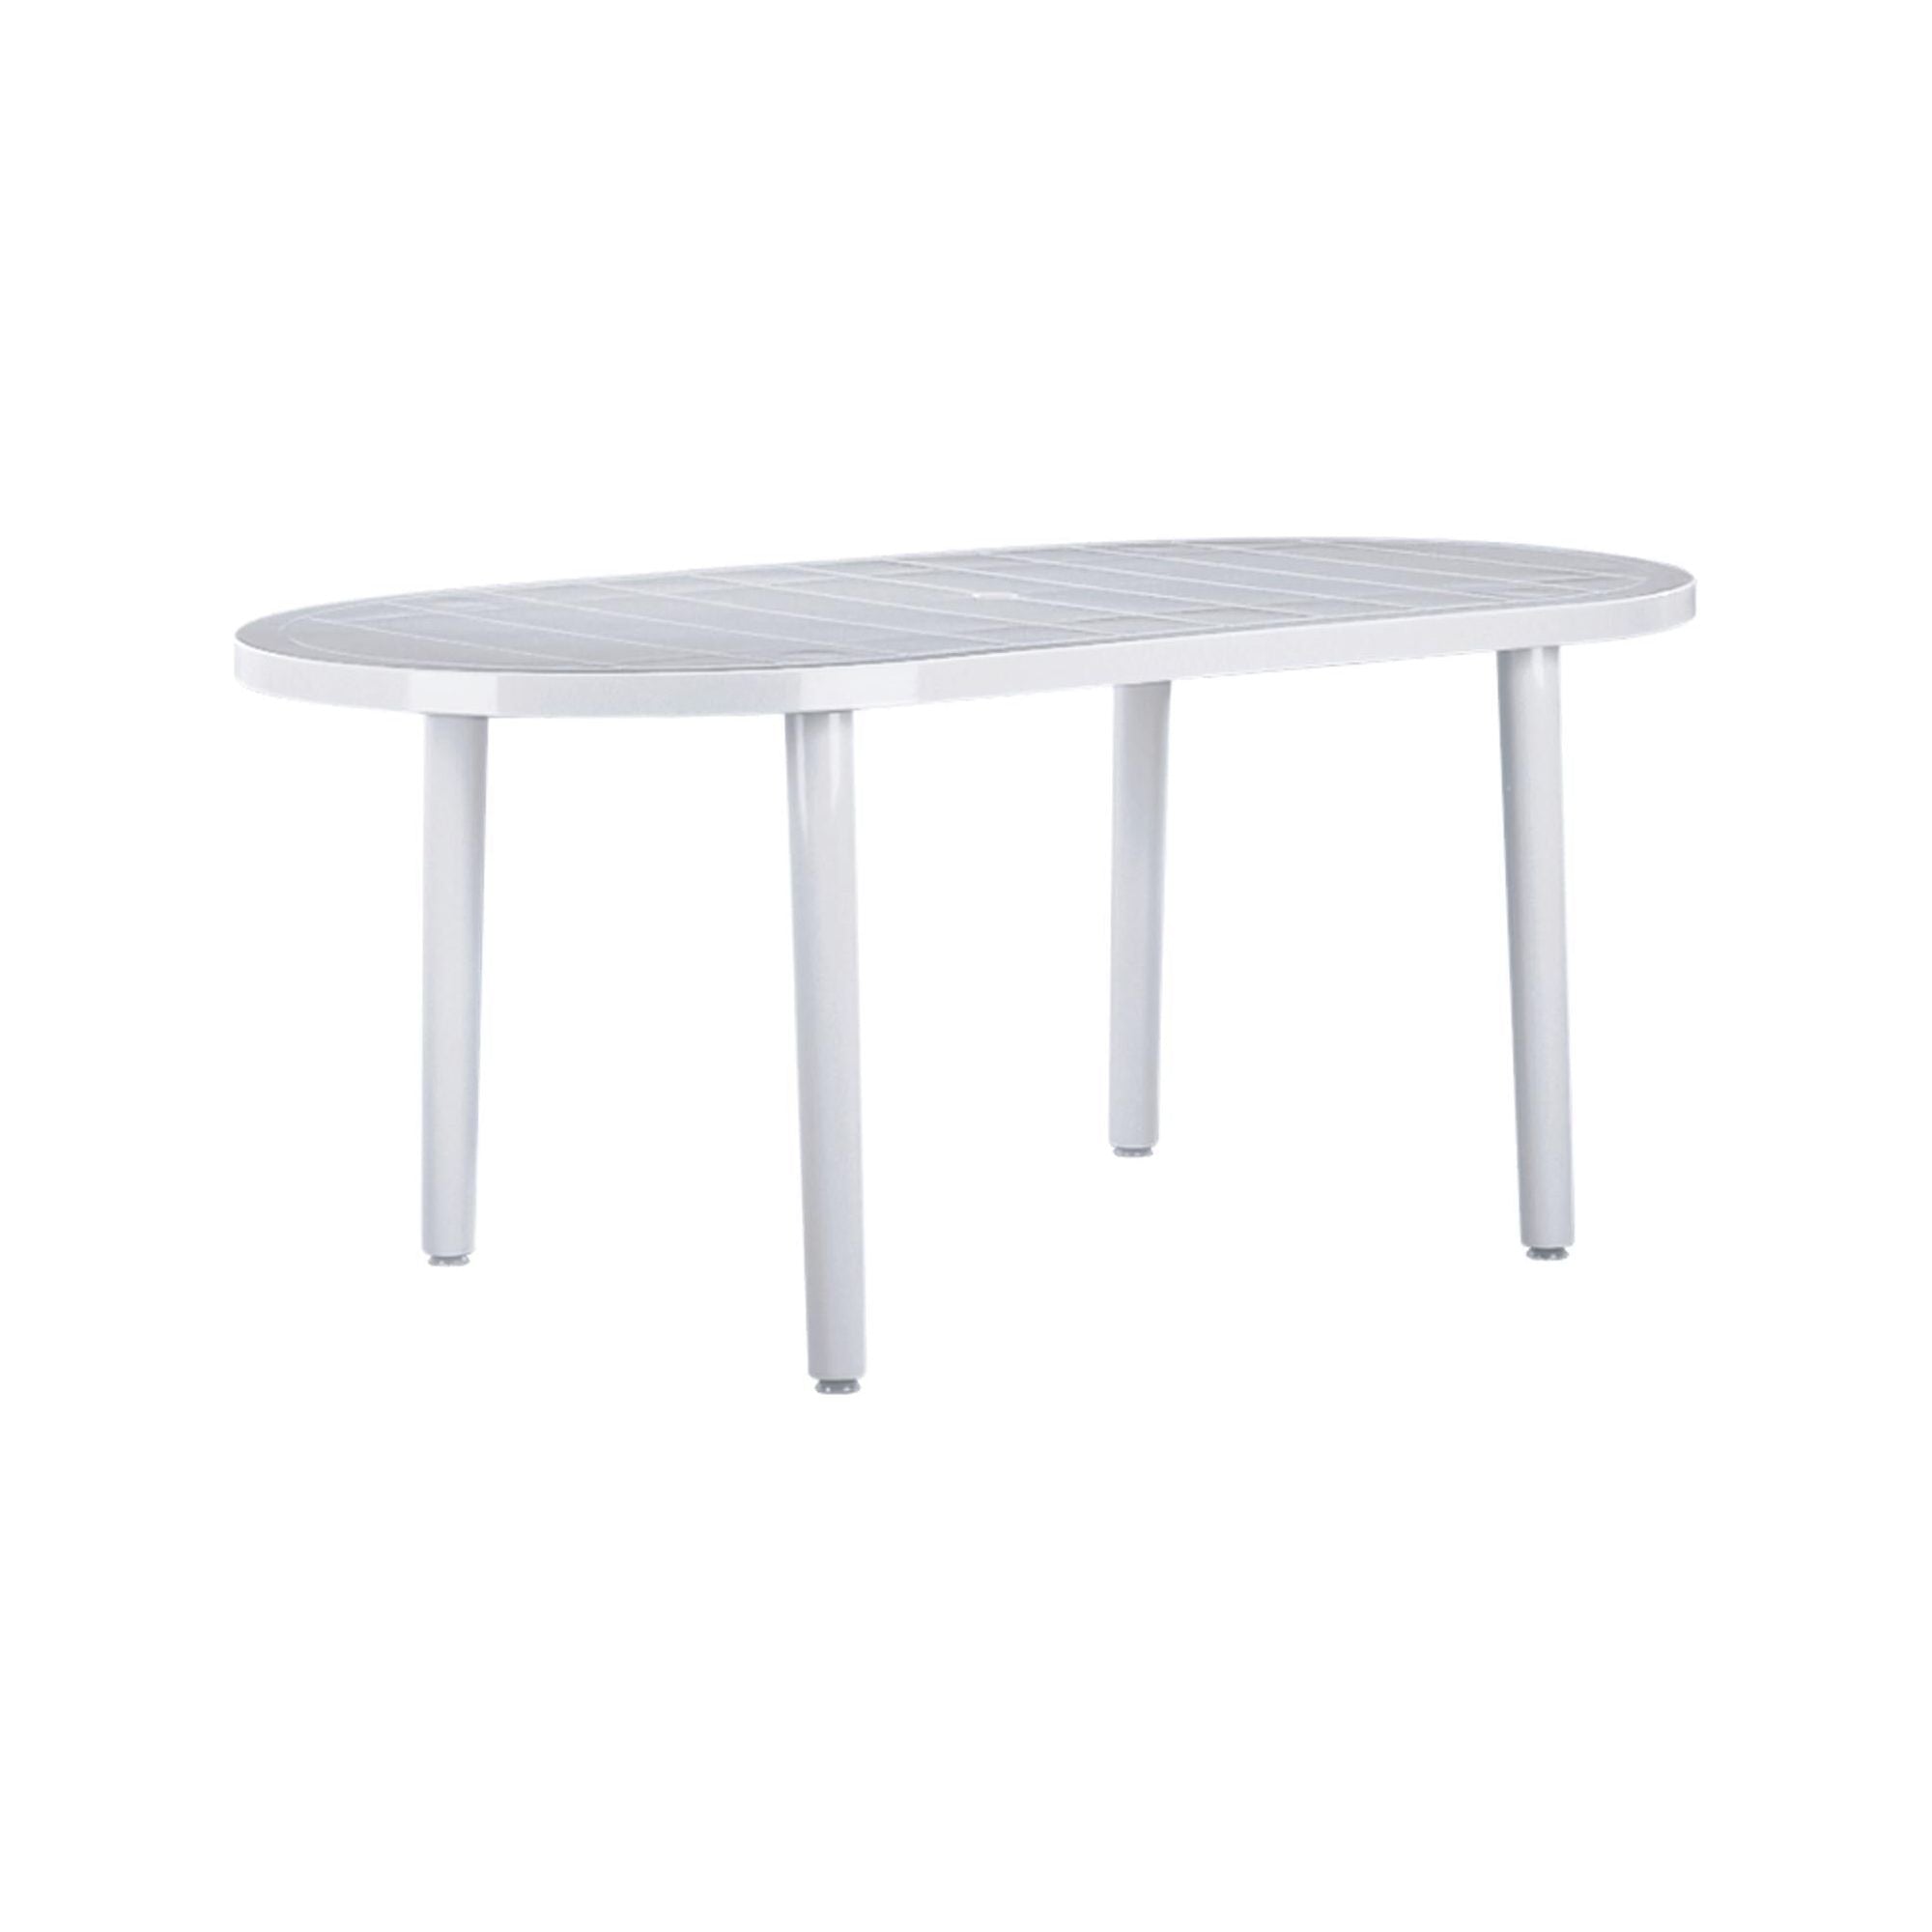 Garbar Brava Oval table Outdoor 180x90 White